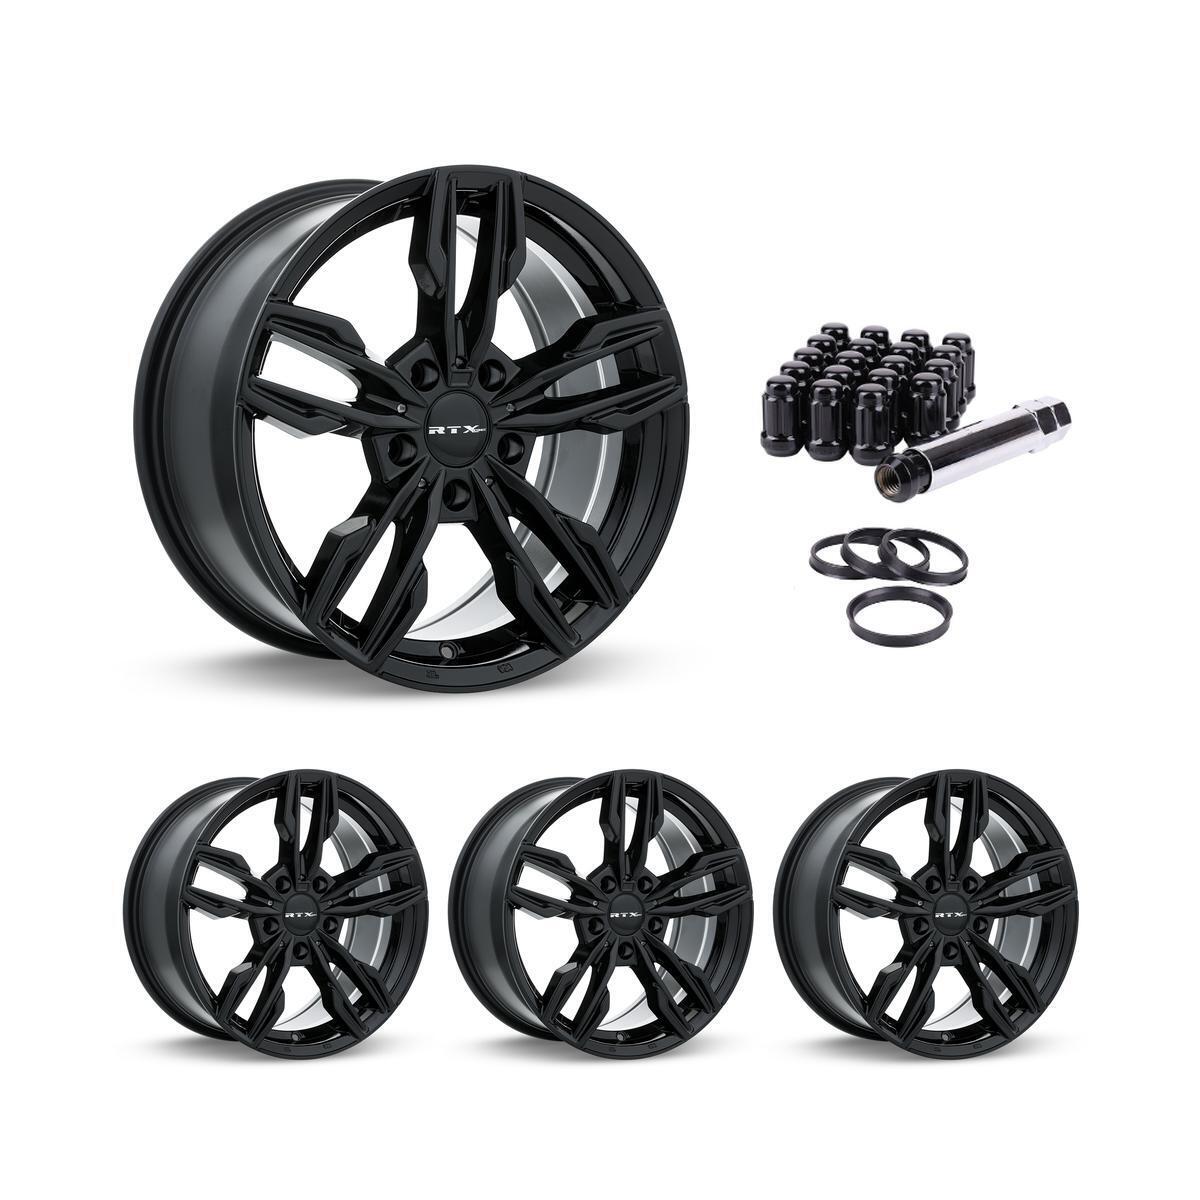 Wheel Rims Set with Black Lug Nuts Kit for 00 BMW 328Ci P861707 17 inch